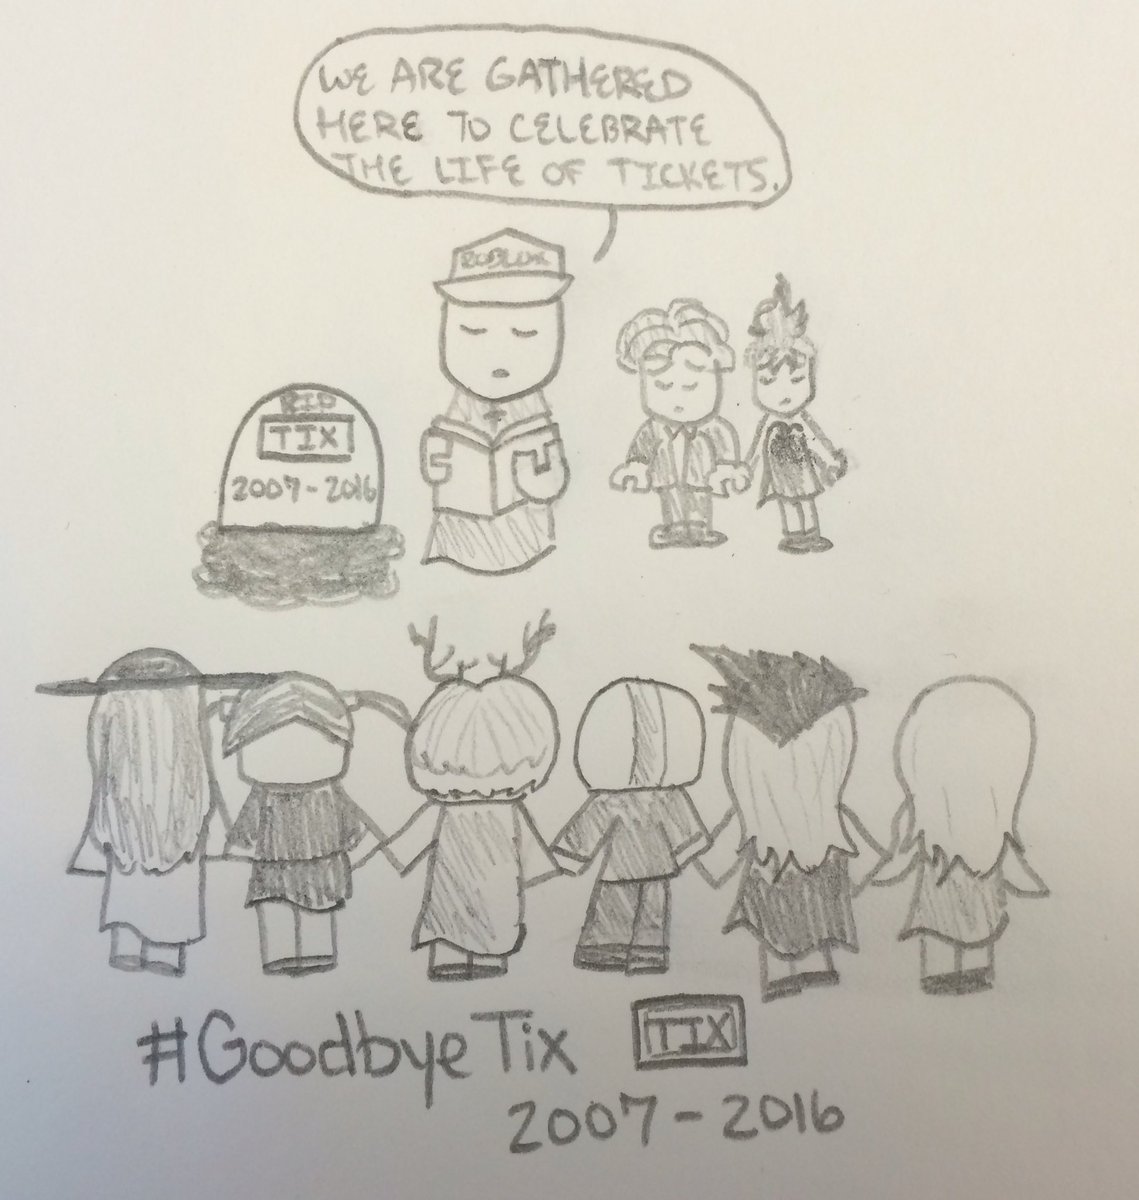 Goodbyetix Hashtag On Twitter - robloxtix hashtag on twitter